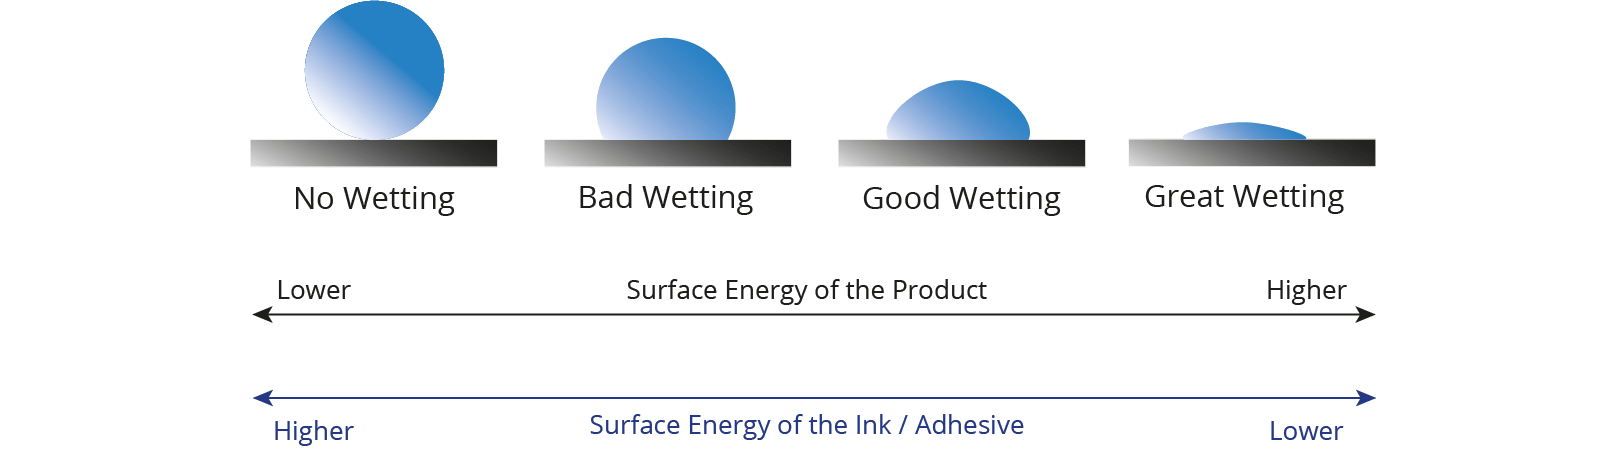 Wetting Behavior of ink / adhesive